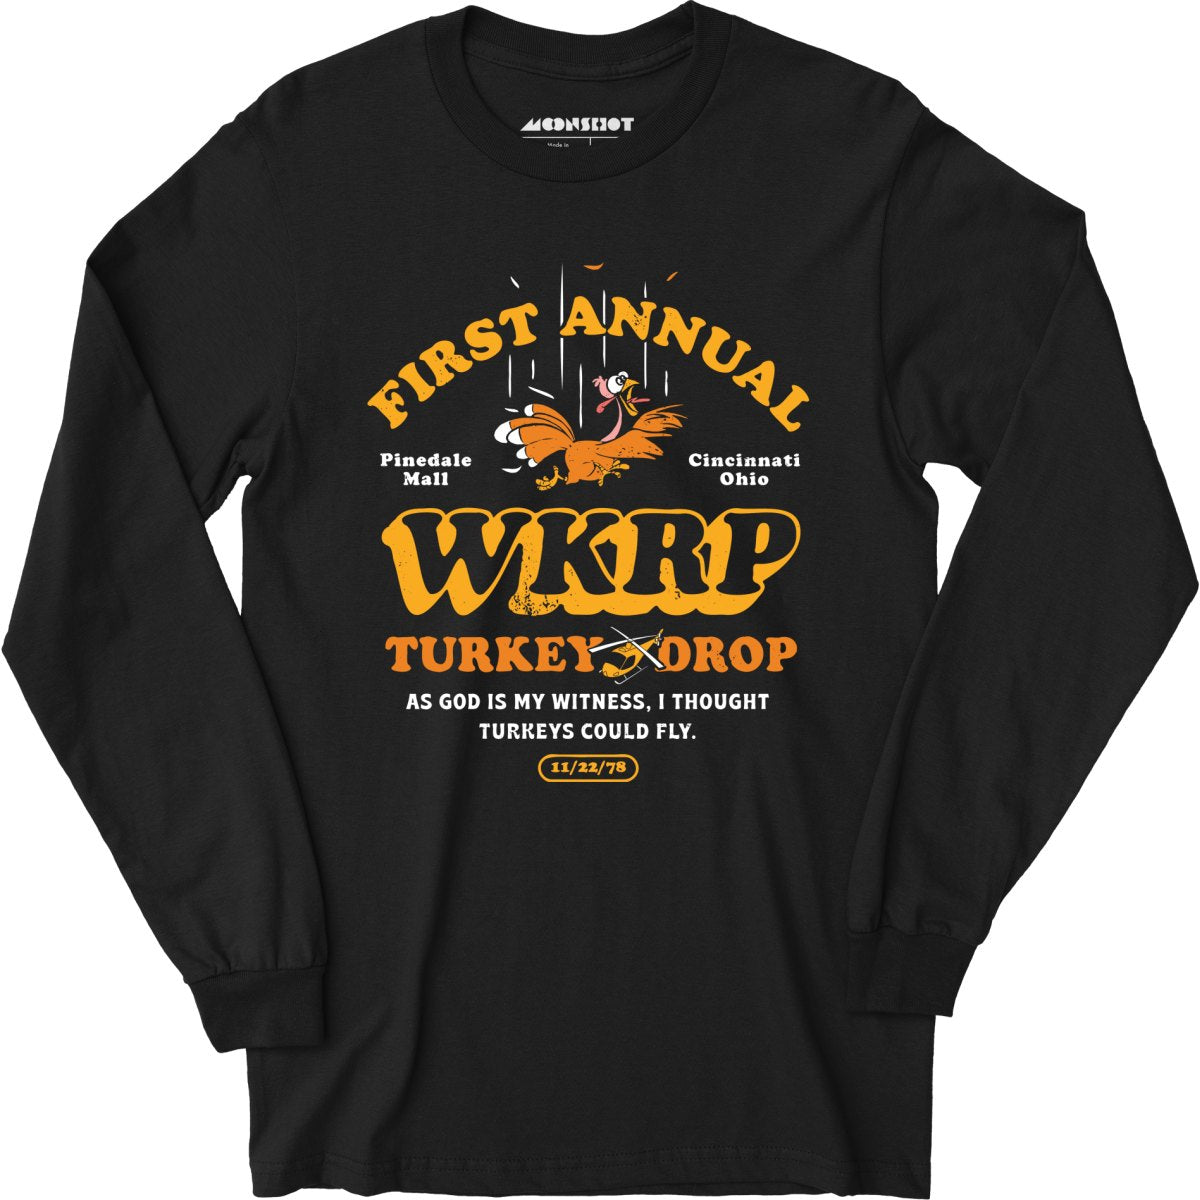 WKRP Turkey Drop - Long Sleeve T-Shirt